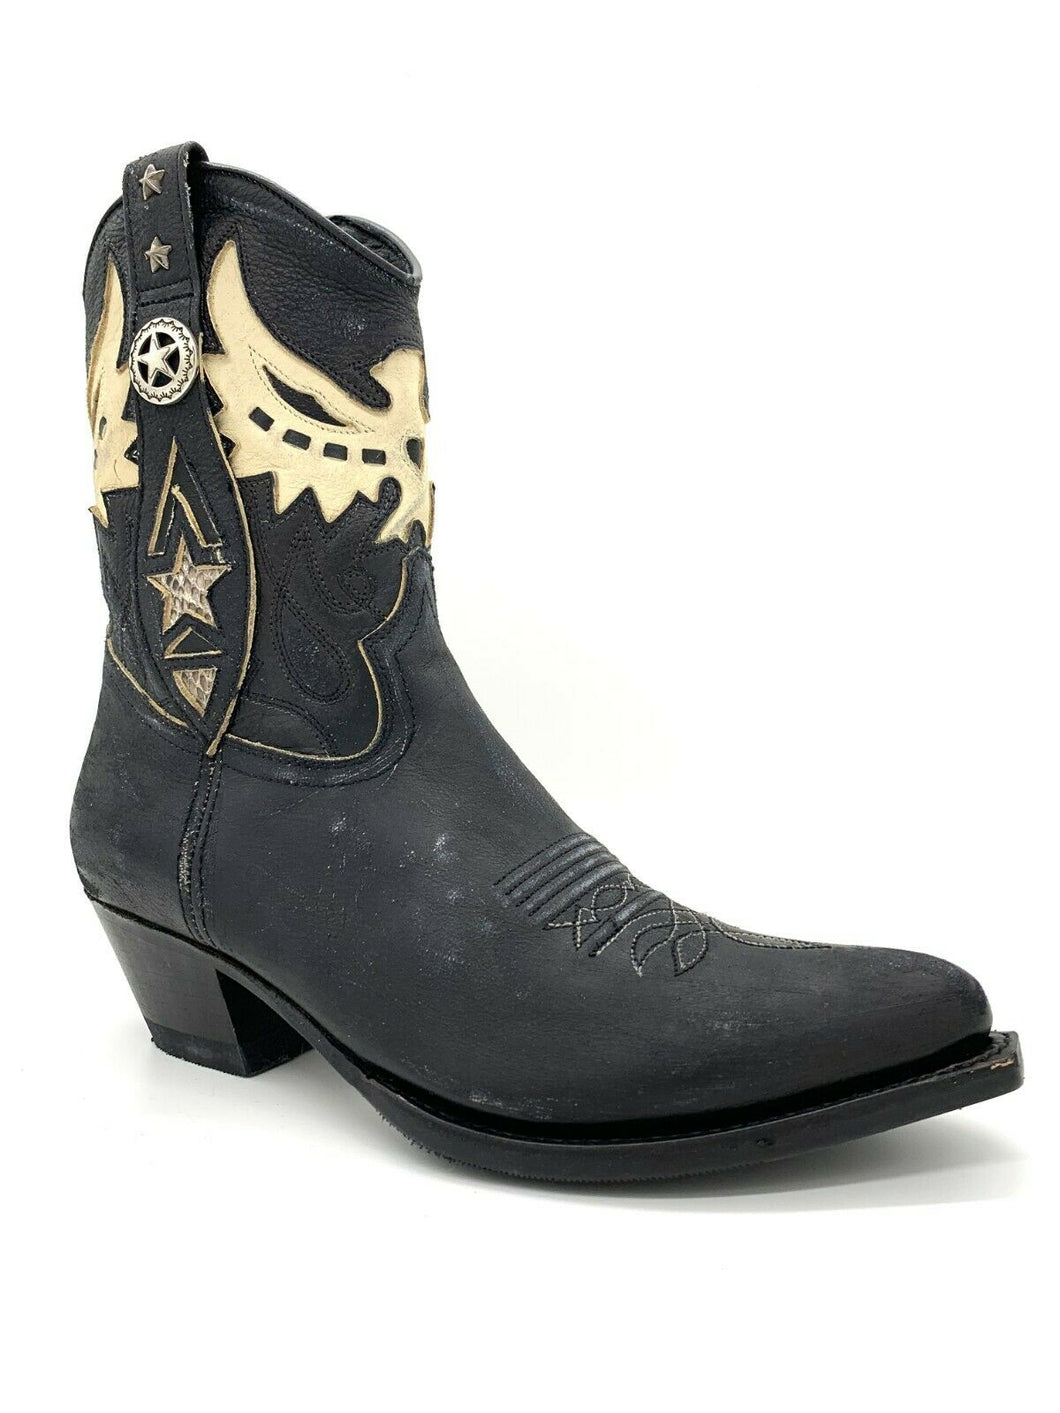 Sendra women's ankle boots, western boots, cowboy boots, biker boots 14298